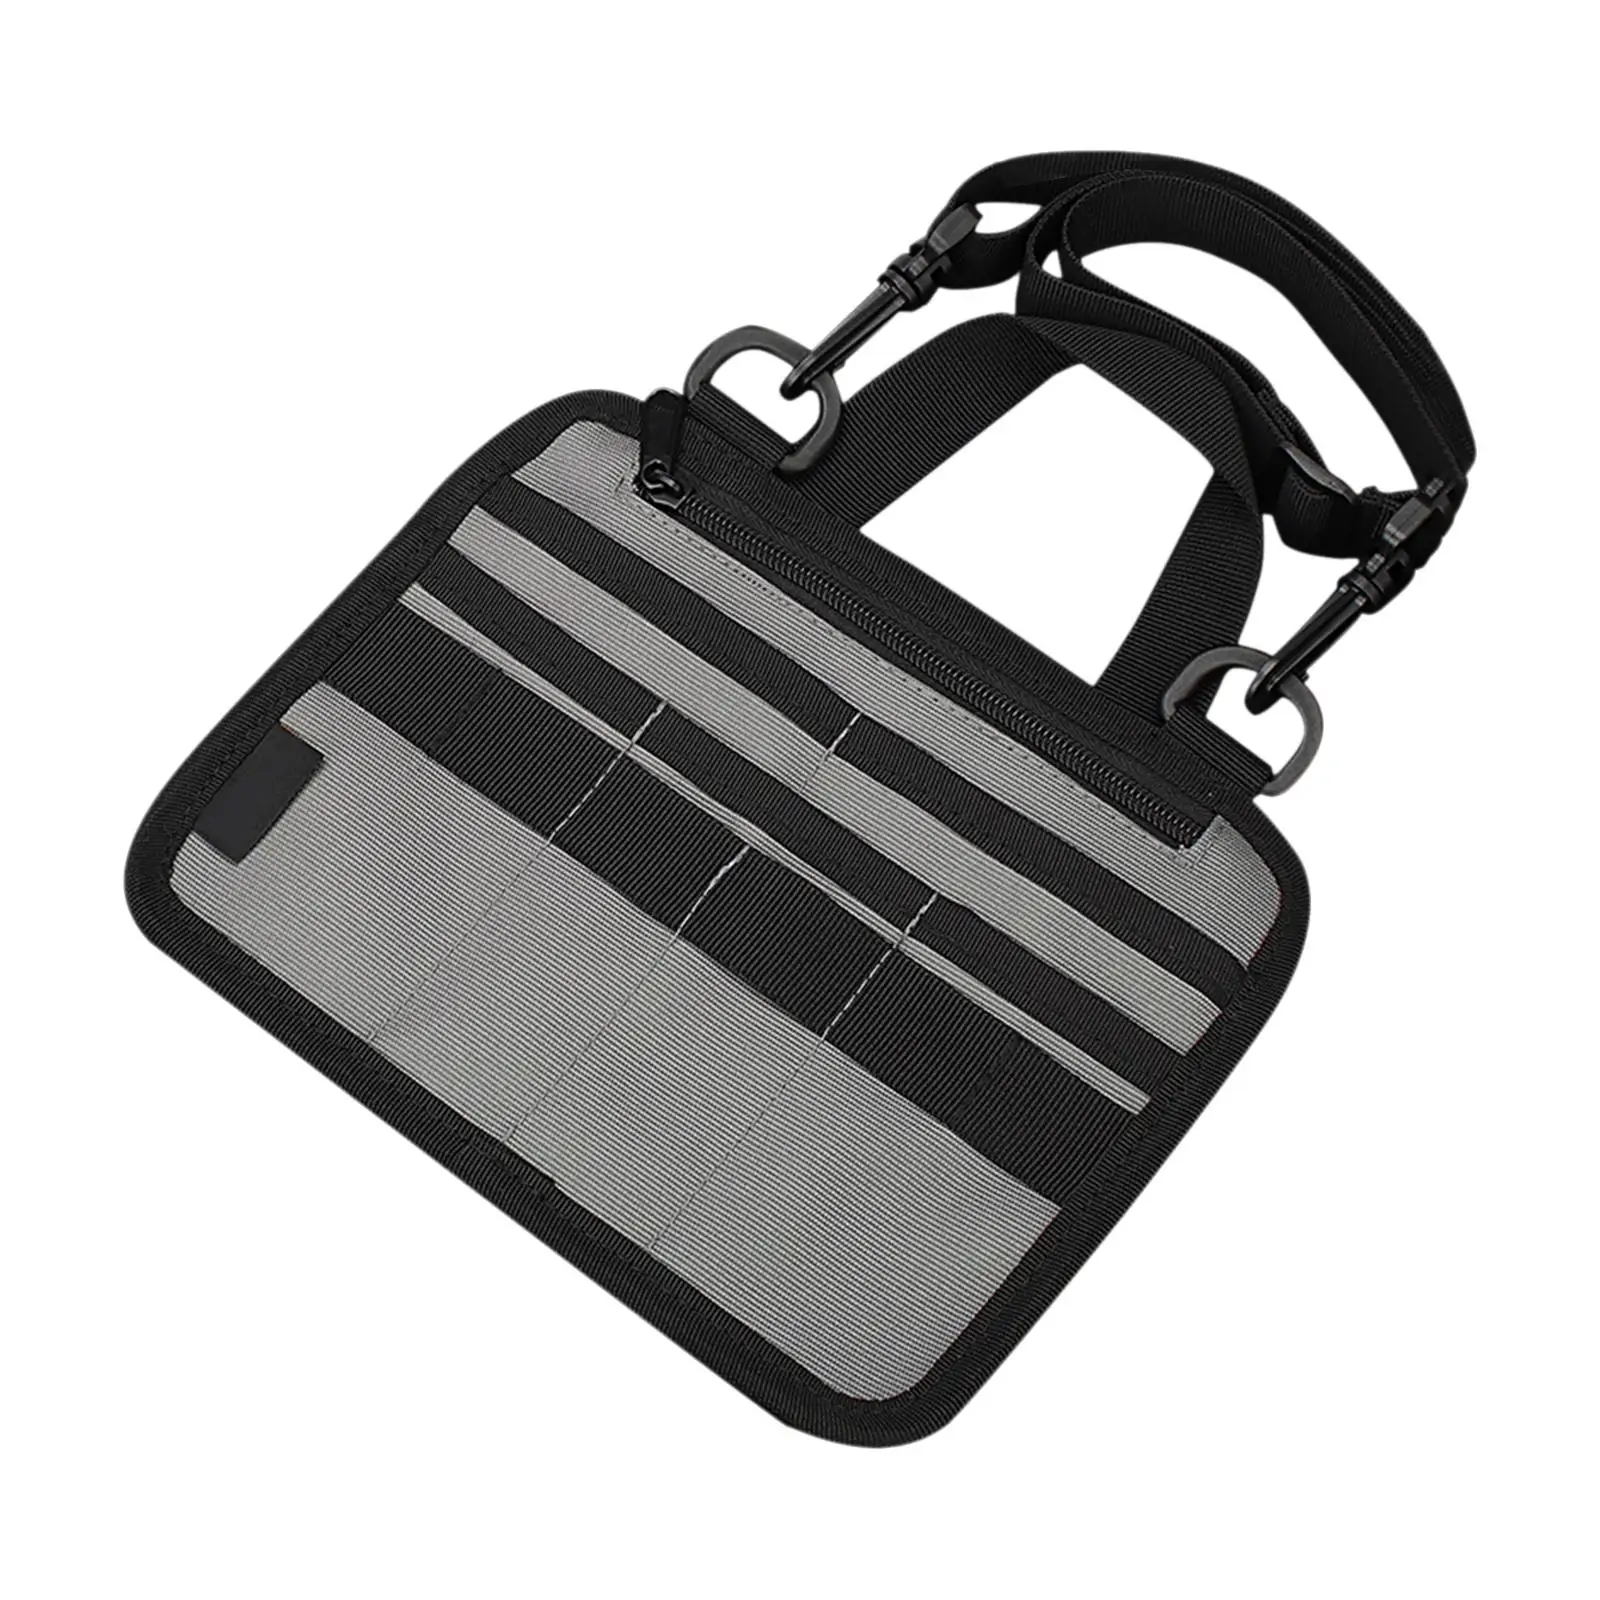 Multifunctional Tool Bag Pocket Organizer Sundries Bag for Hiking Camping